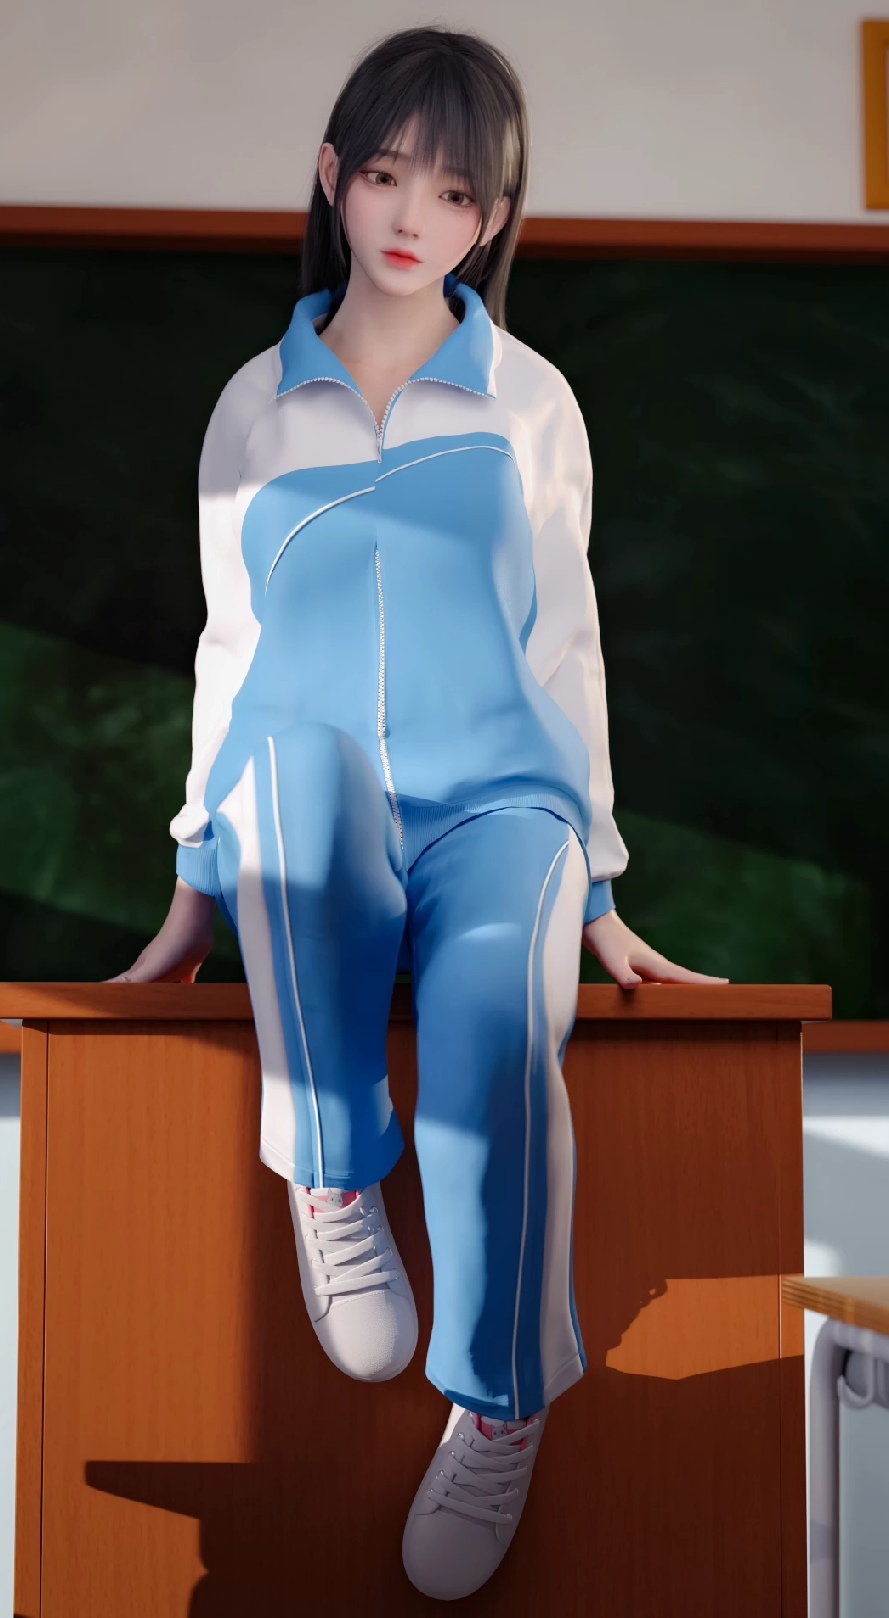 Asian Women White Shoes Brunette Long Hair Women Indoors Looking Away 3D CGi Fantasy Girl 889x1618